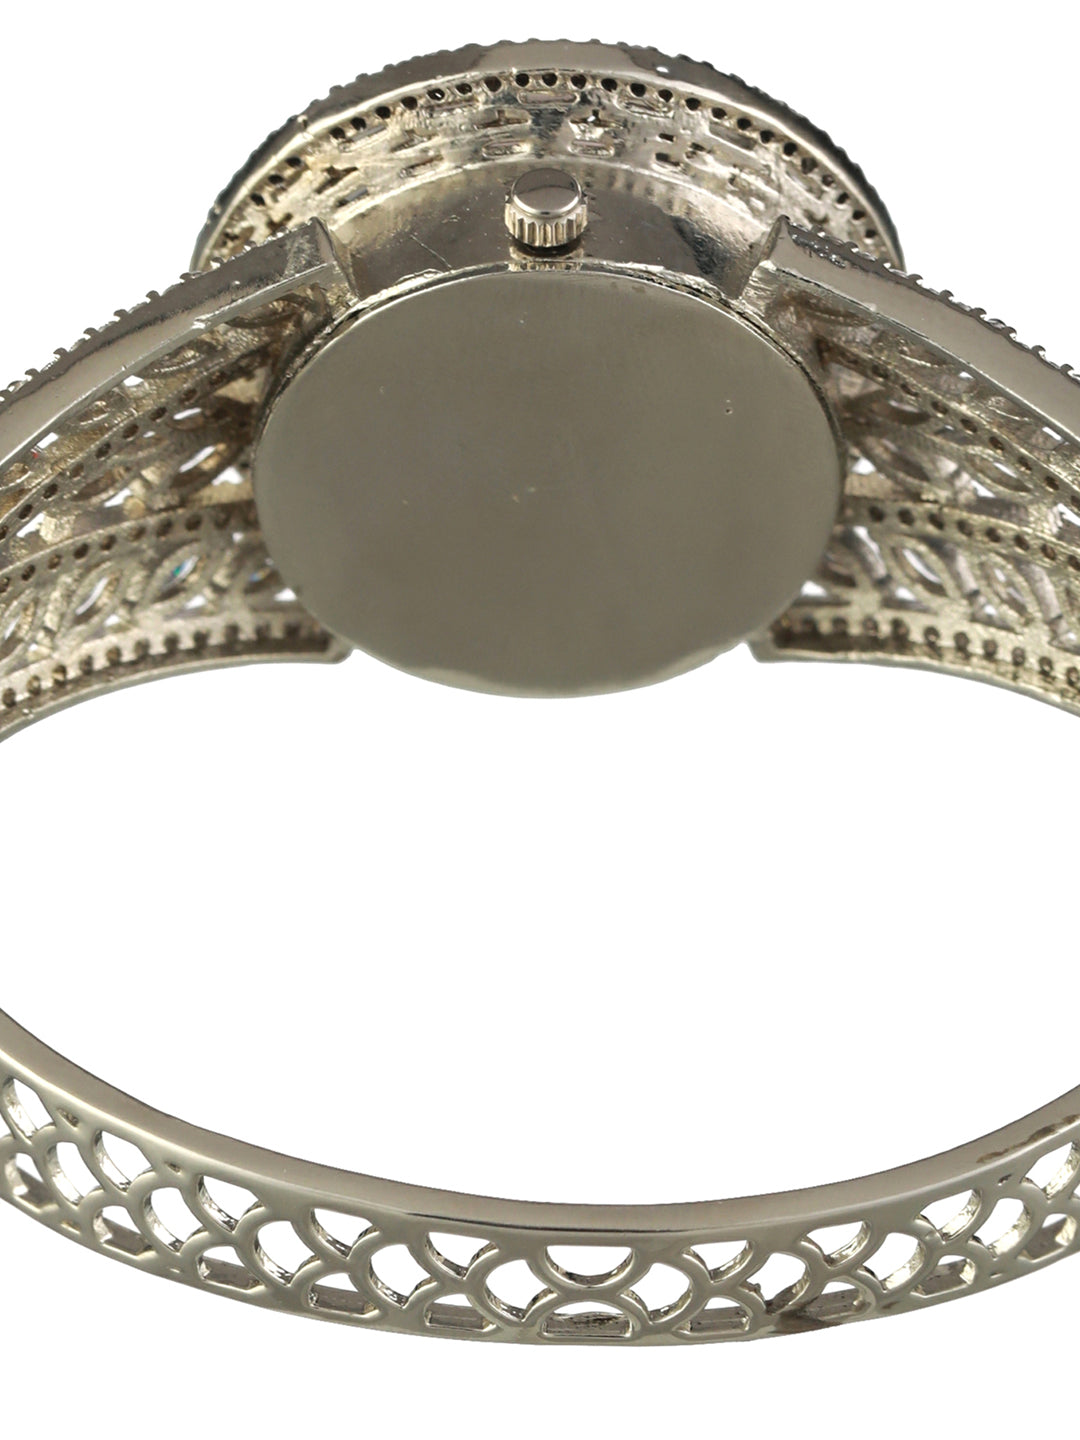 Round American Diamond Silver-Plated Bracelet Watch